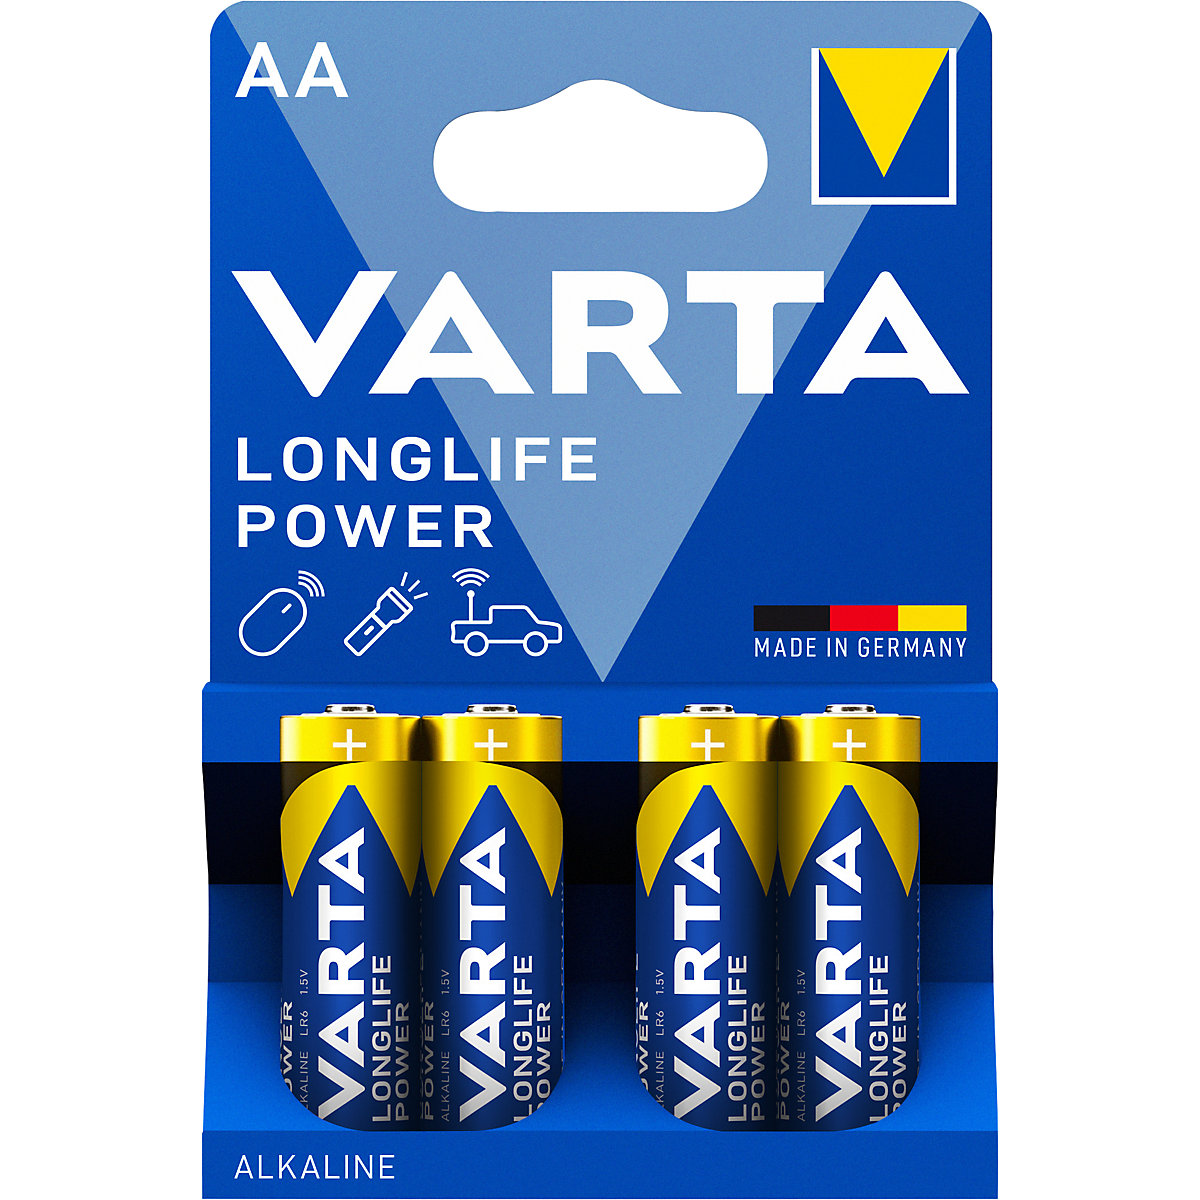 LONGLIFE Power Batterie VARTA, AA, VE 4 Stk, ab 20 VE-2